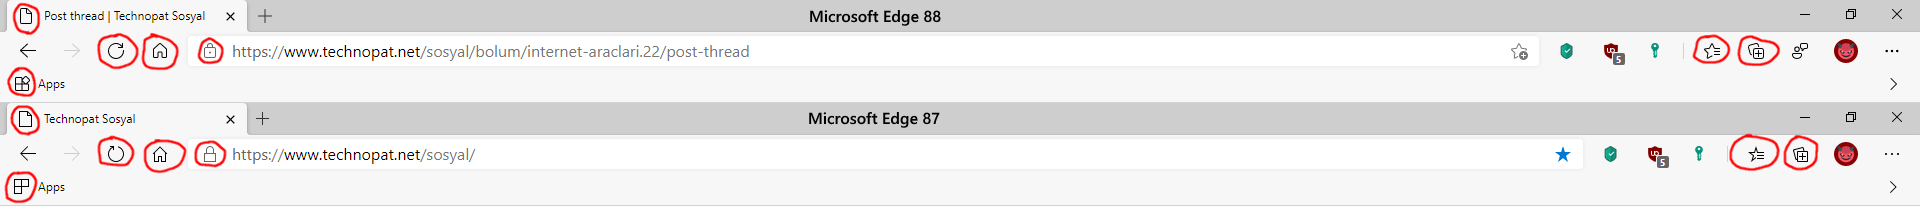 microsoft edge 88 yeni ikonlar.png